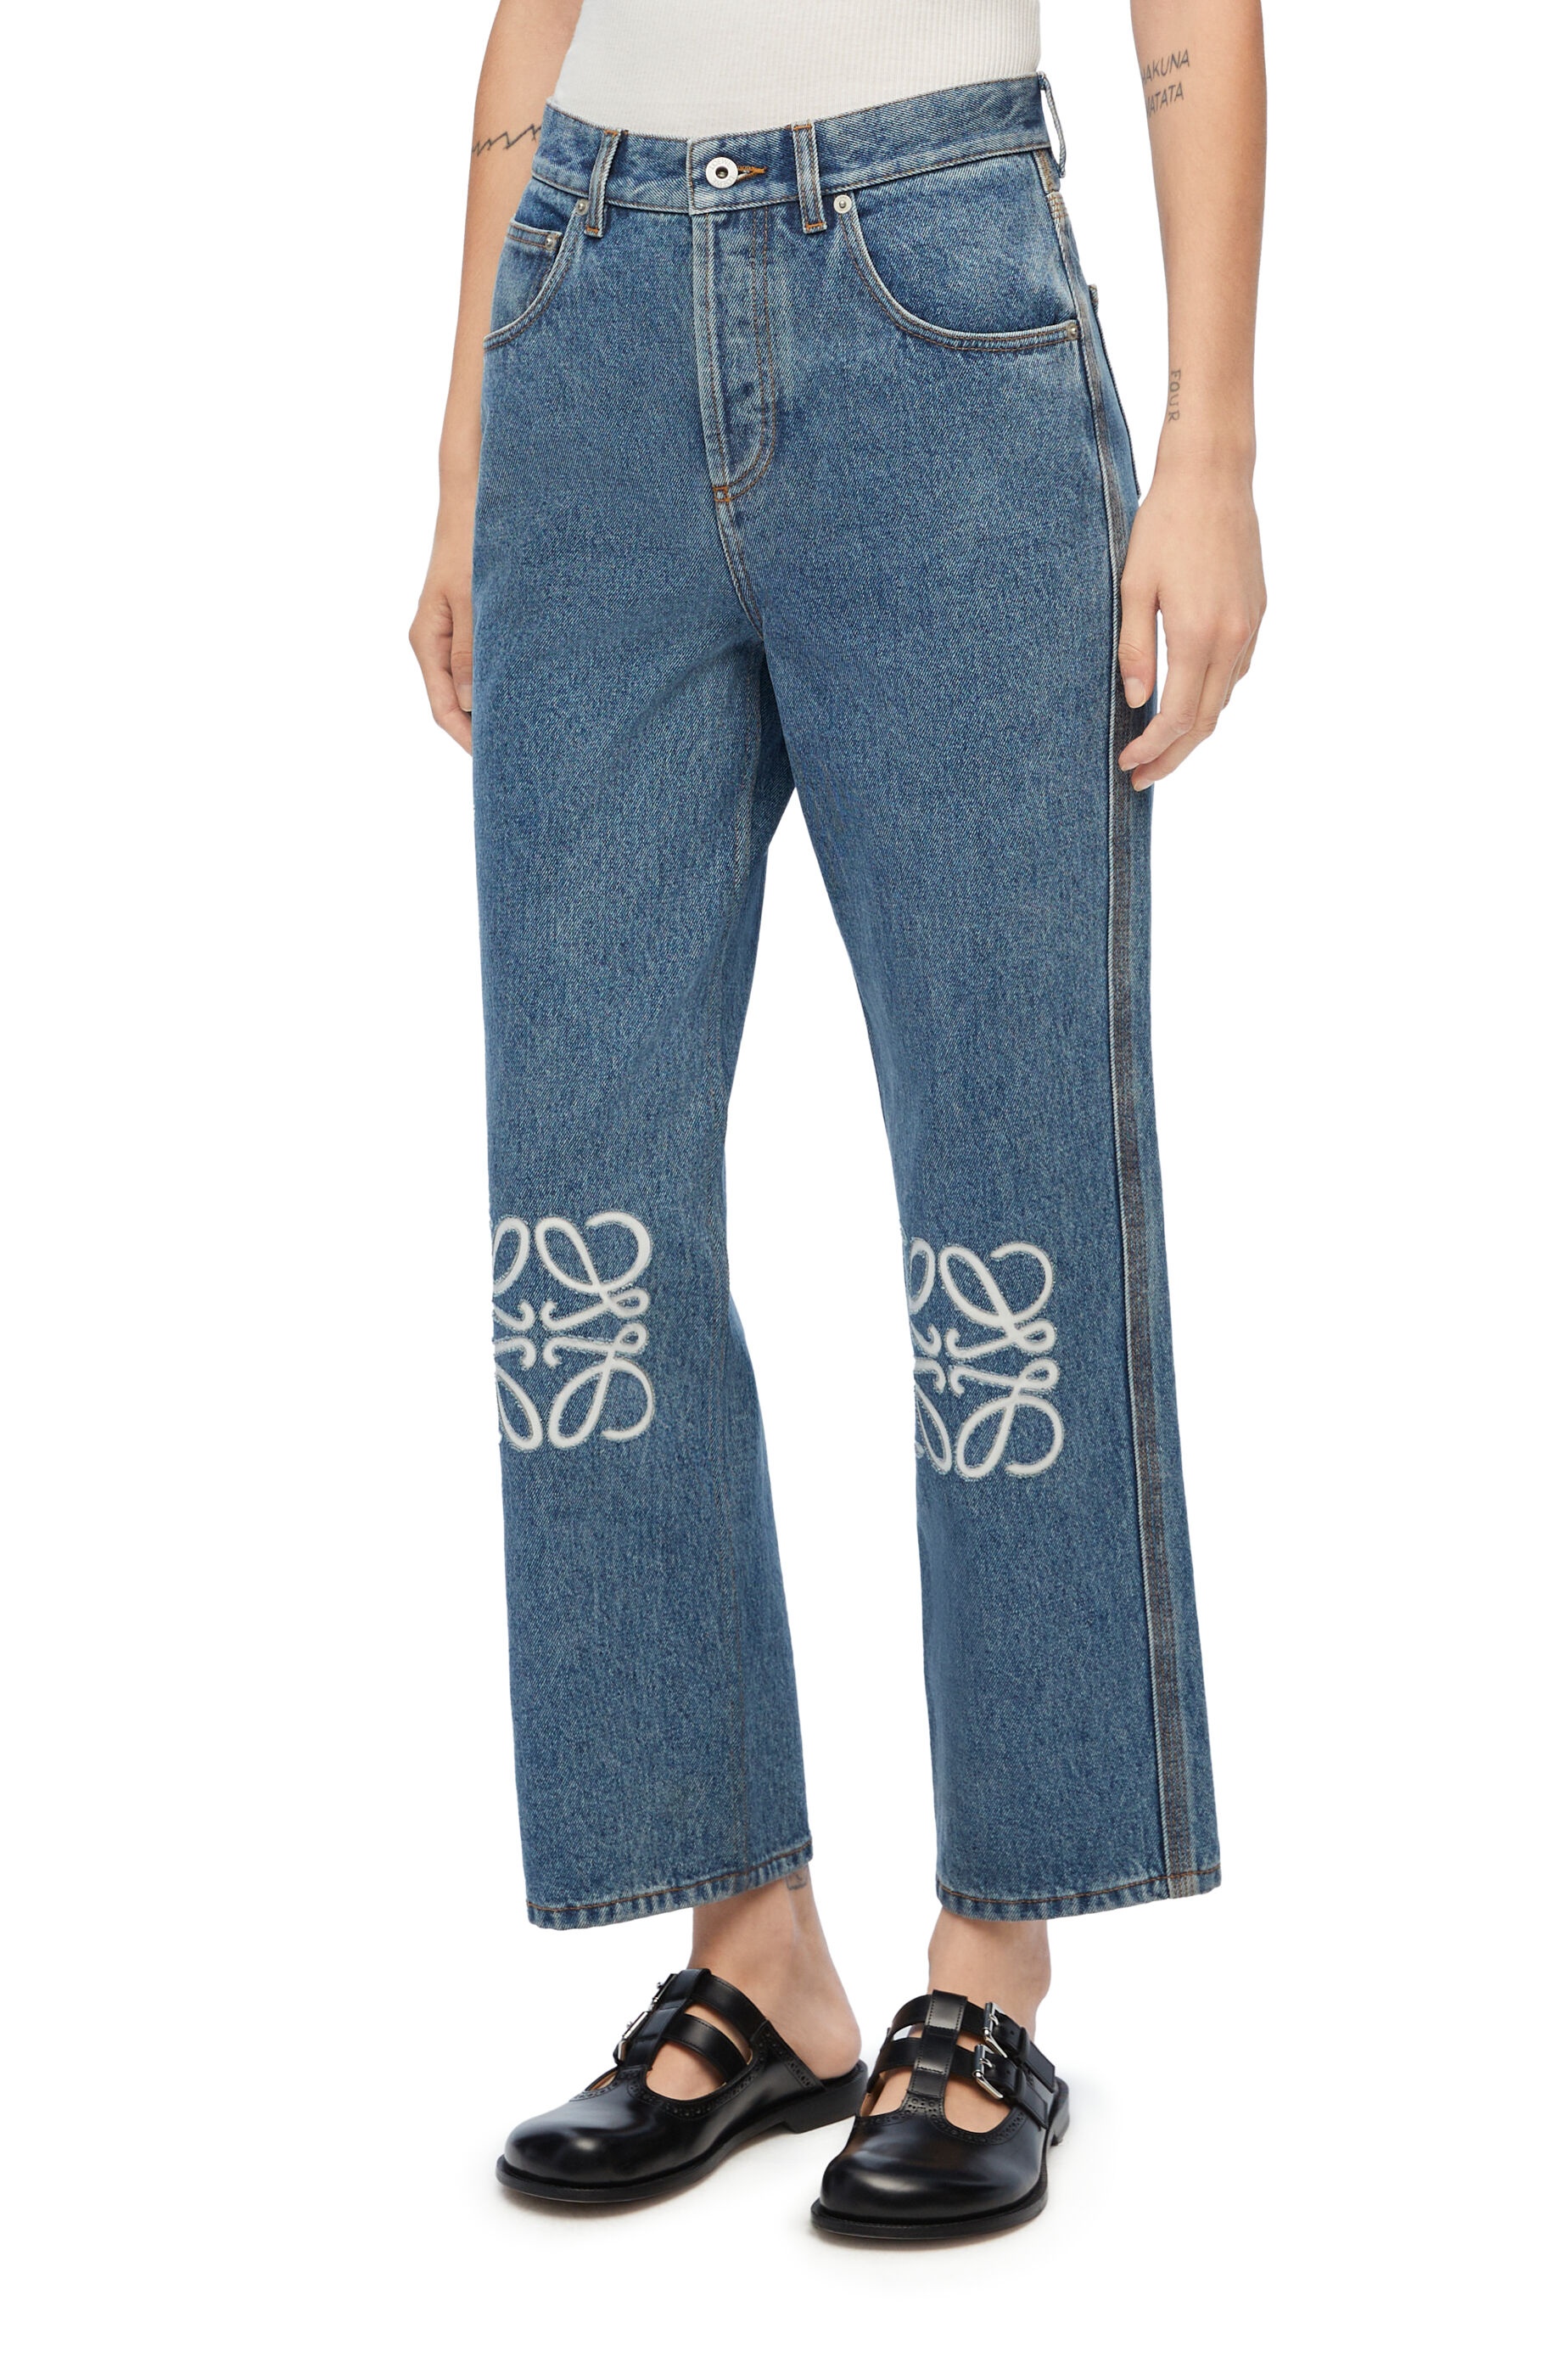 Anagram cropped jeans in denim - 3